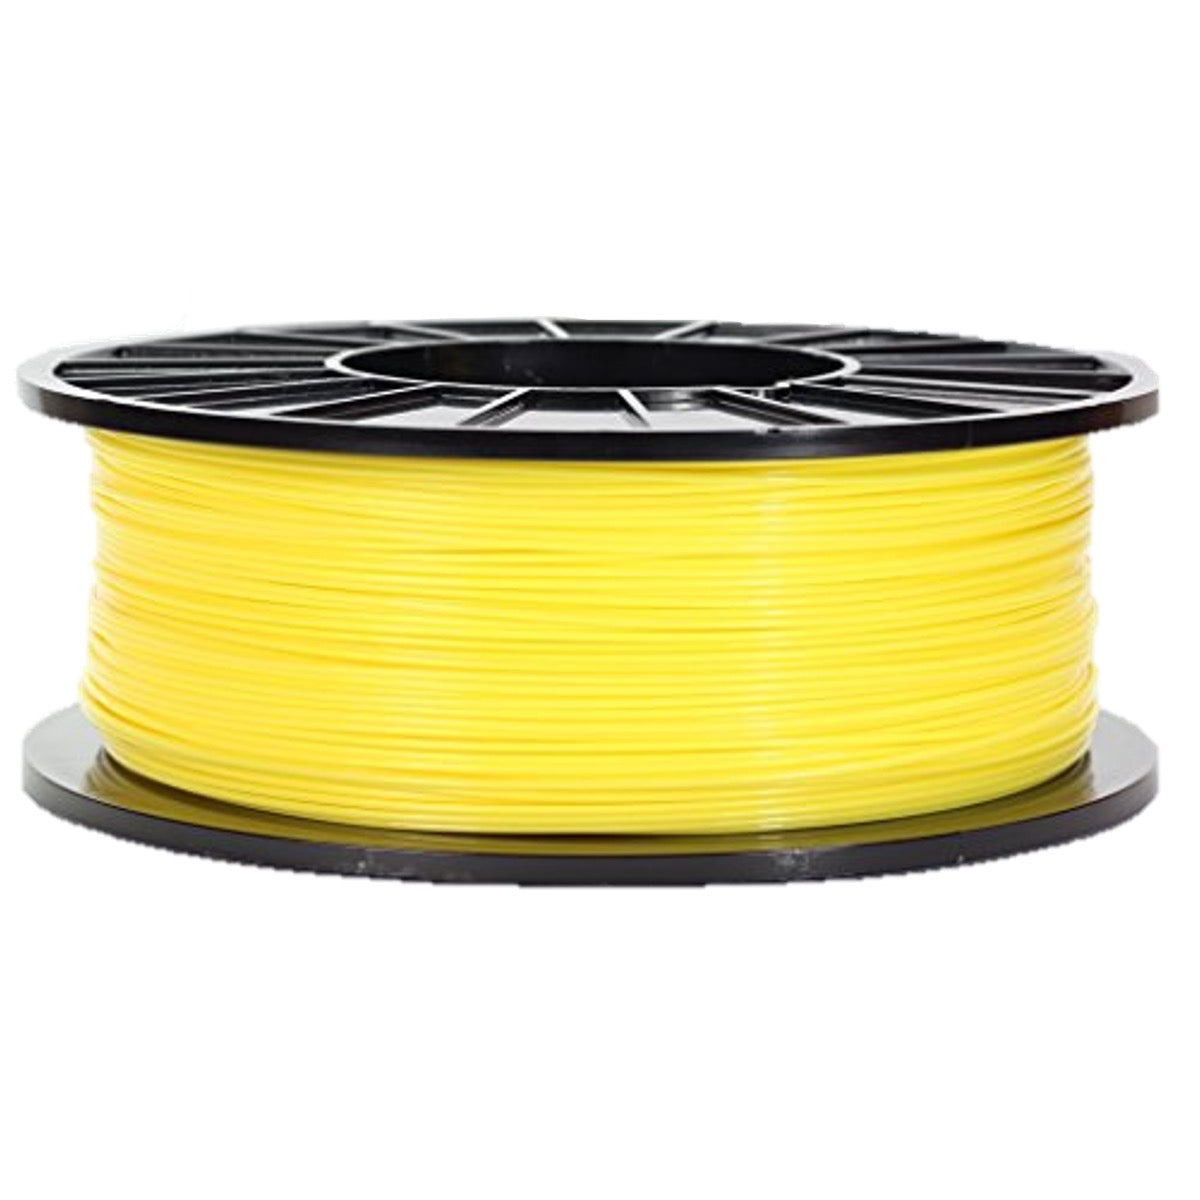 3DMakerWorld Premium PLA Filament - 1.75mm, 1kg, Yellow